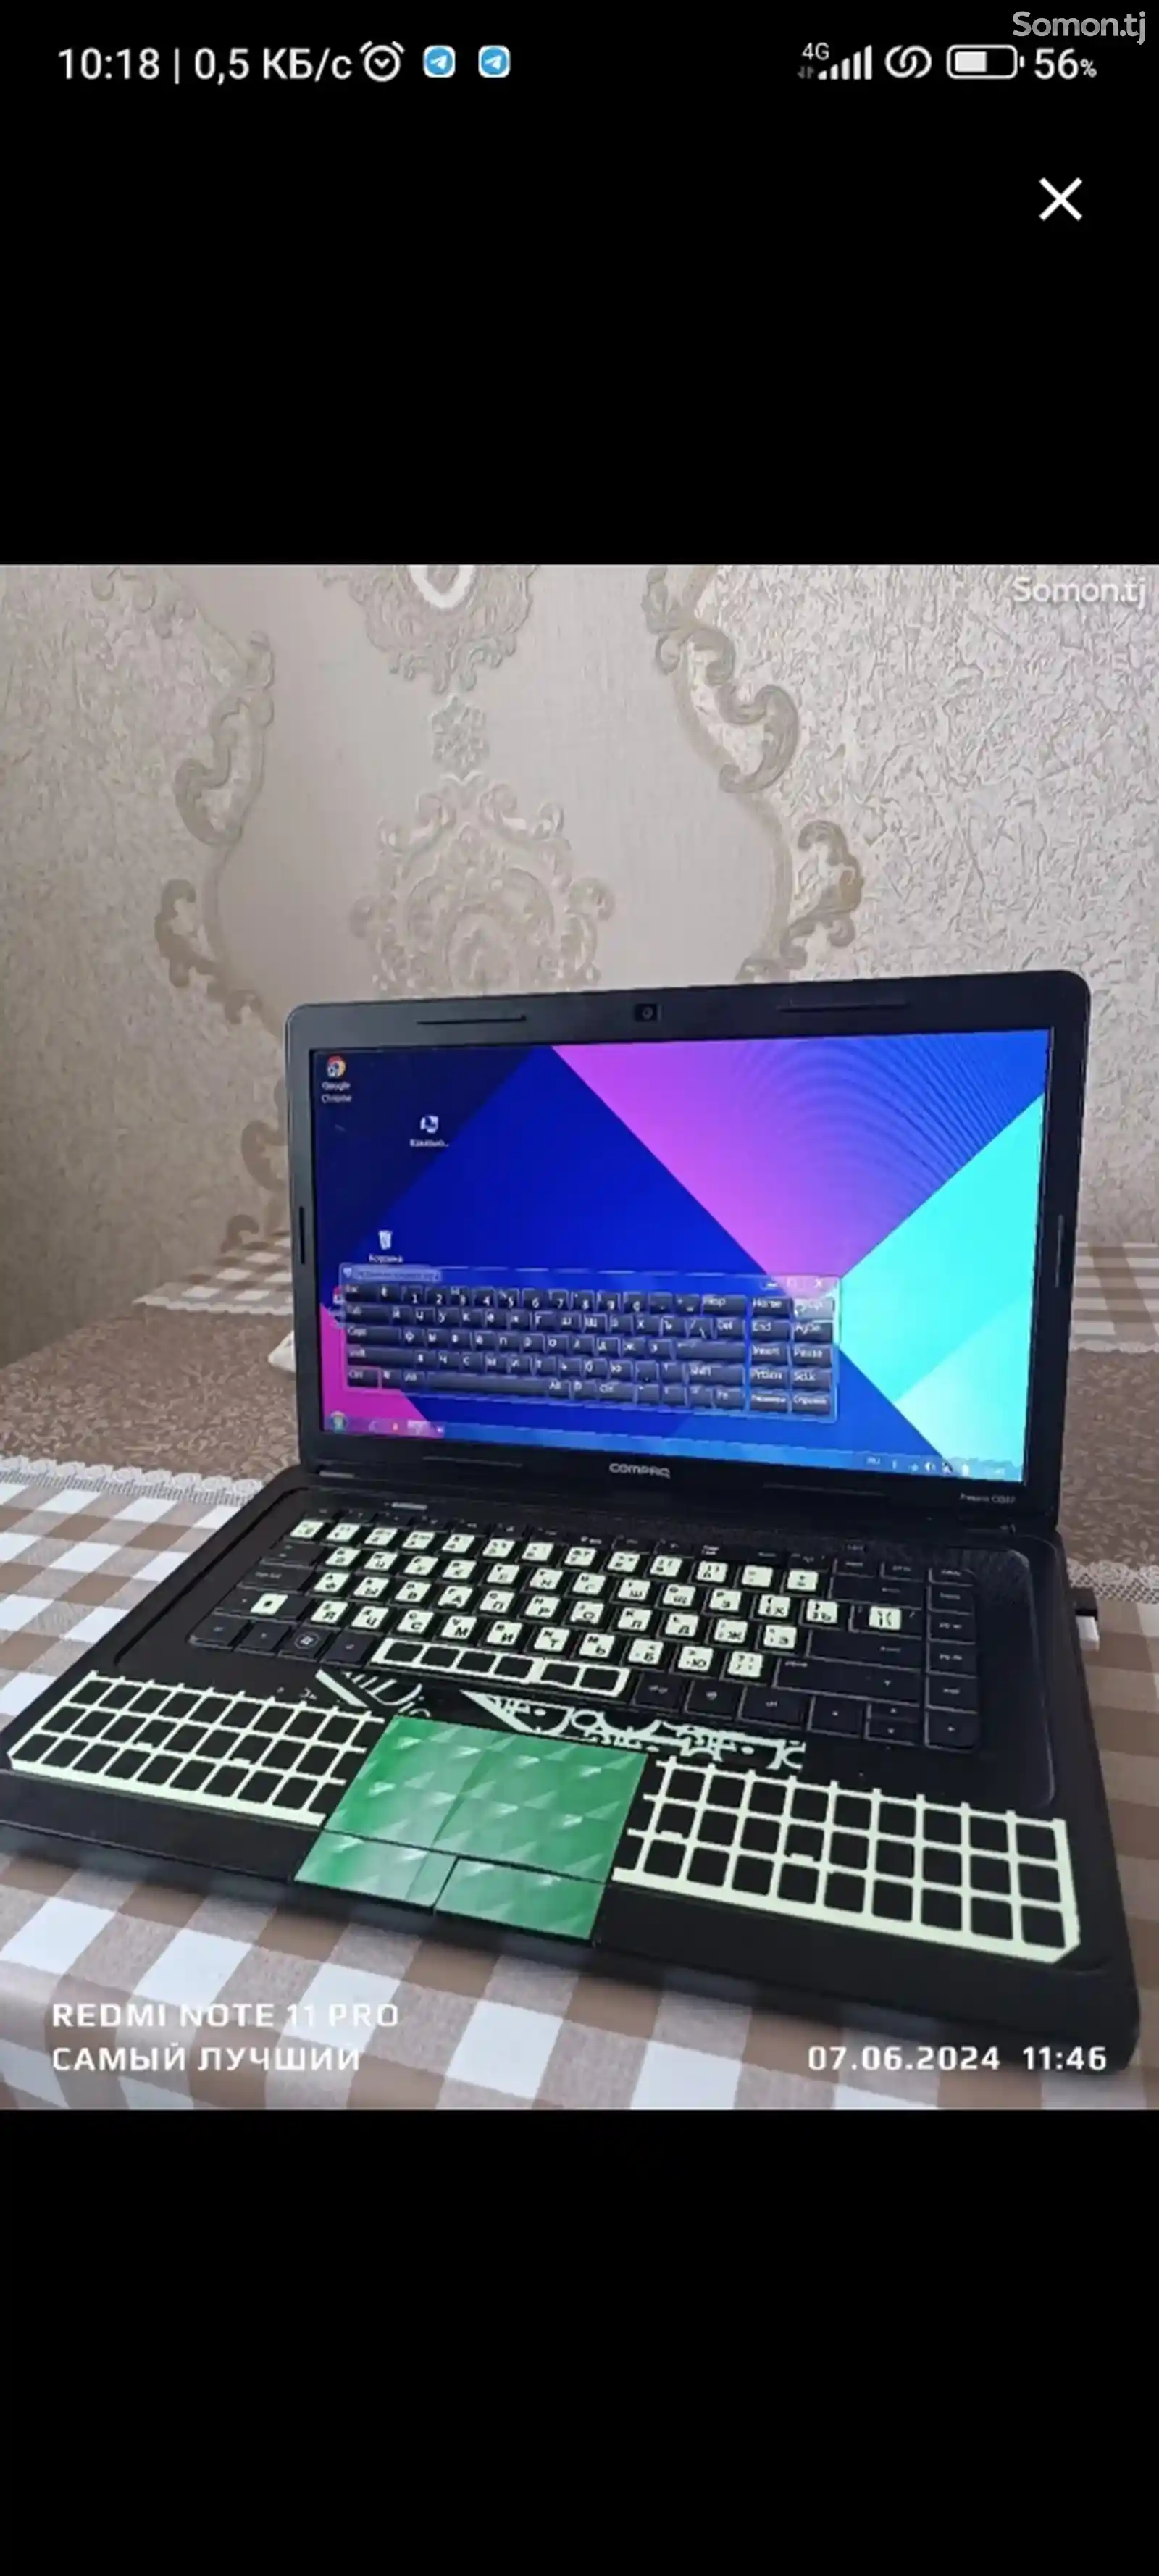 Ноутбук Compaq Perasio CQ56 500Gb Windows 7 Pro-2